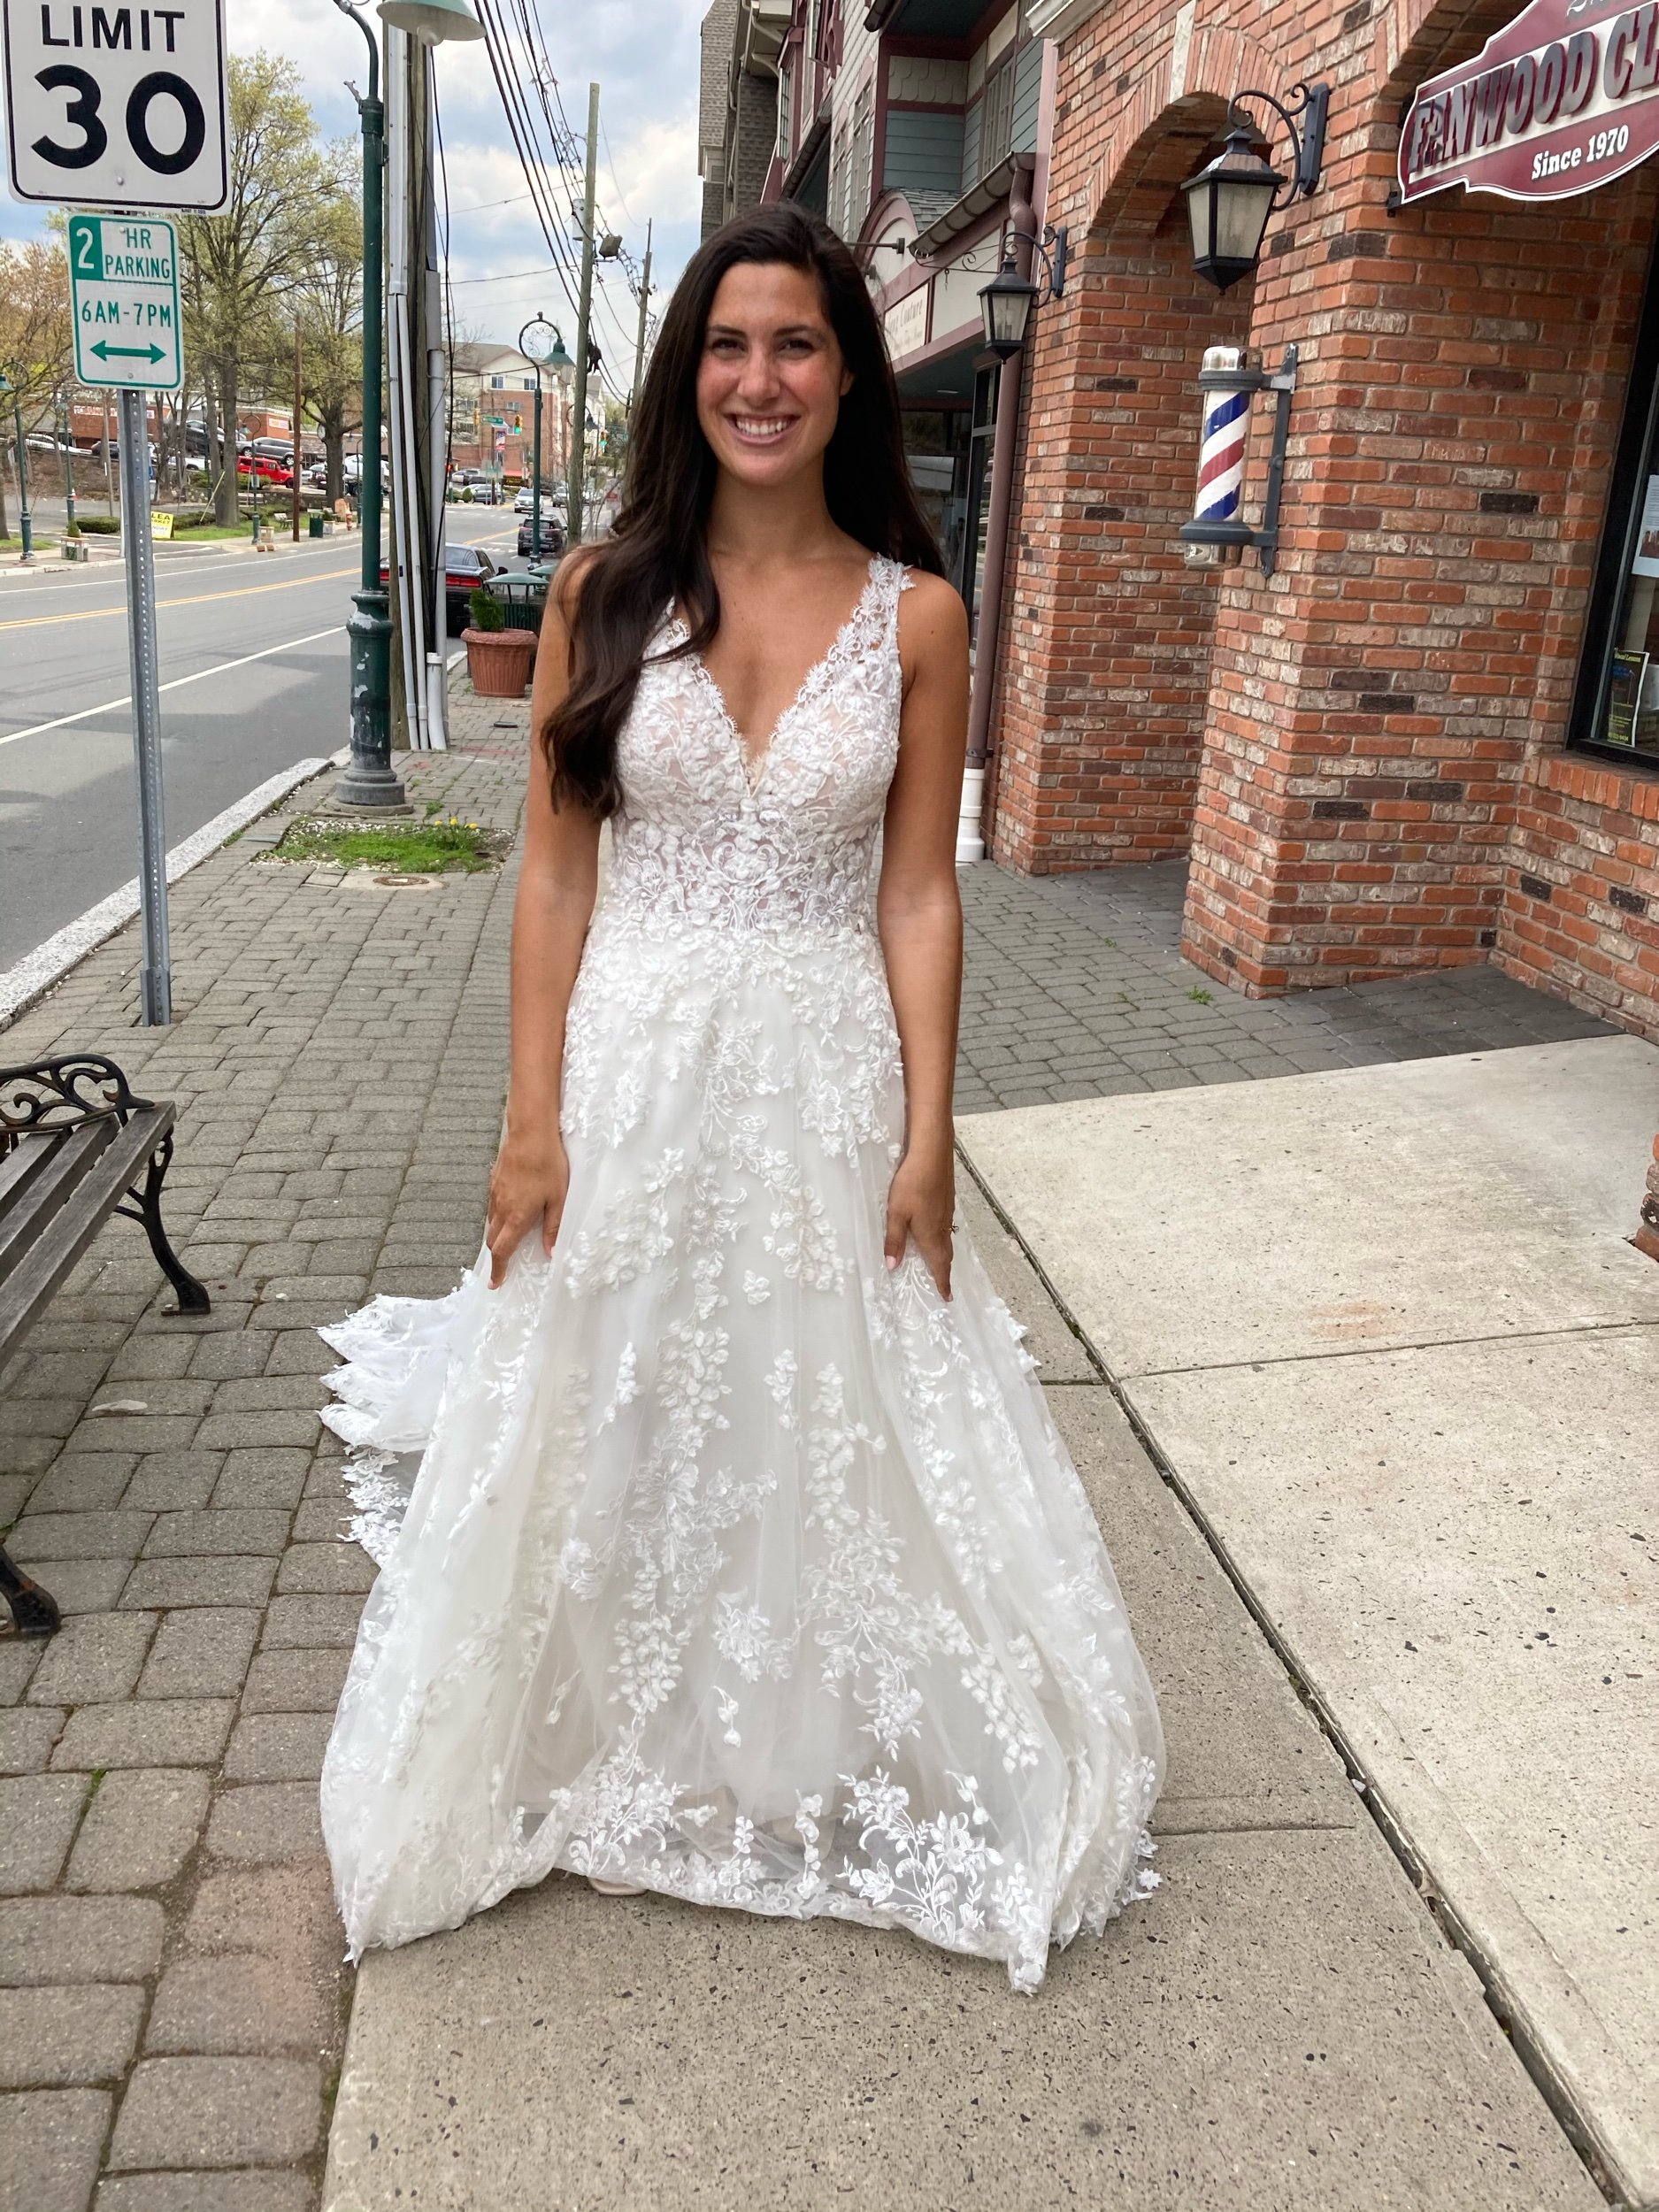 Wedding Dress Shopping Tips From an Expert -  Fashion Blog